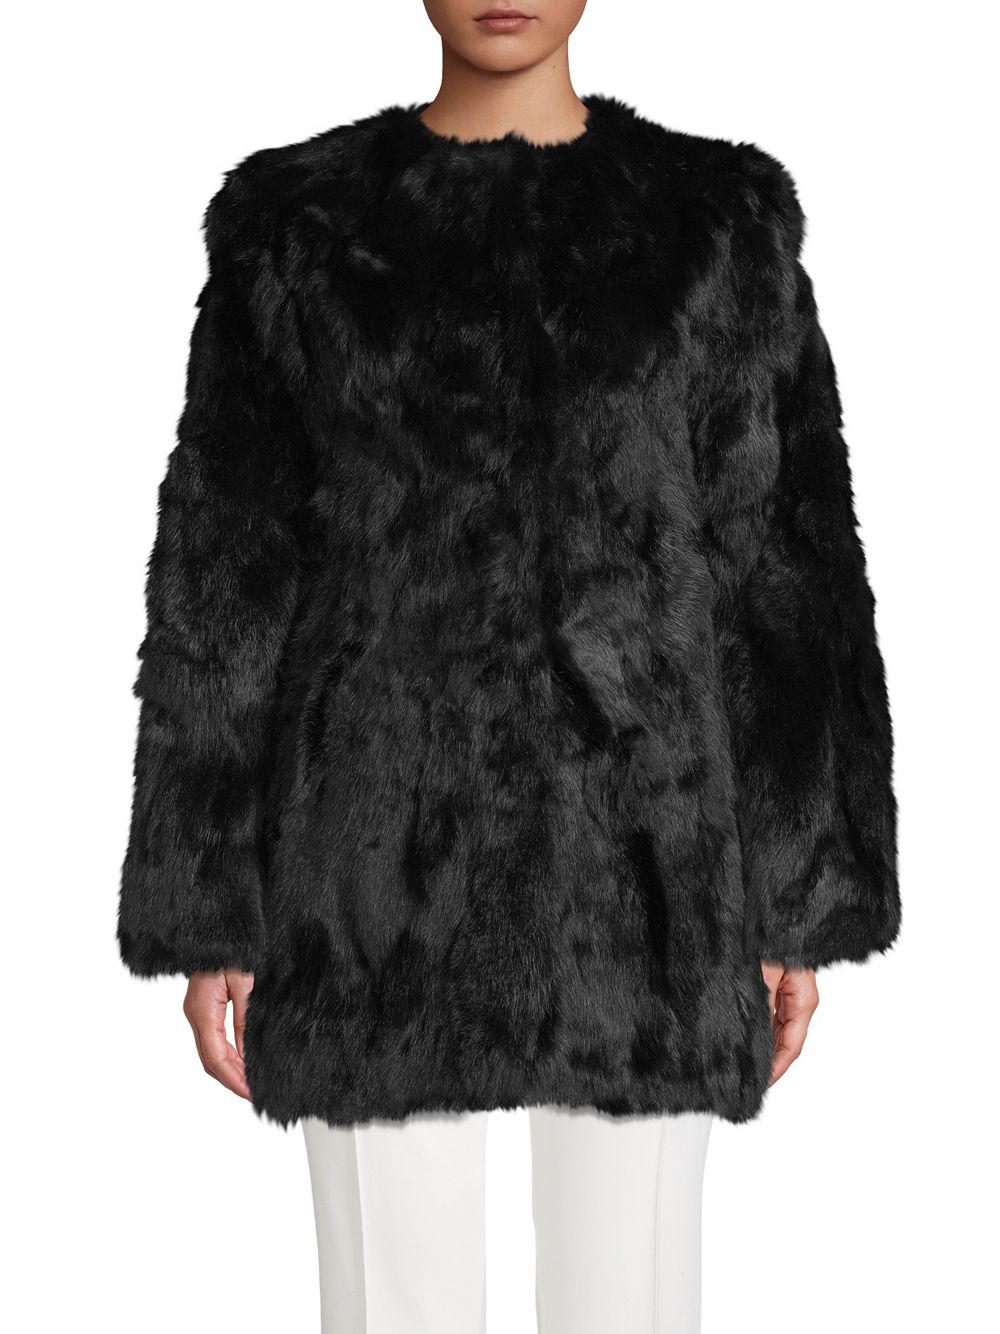 Adrienne Landau Rabbit Fur Coat in Merlot (Black) - Lyst